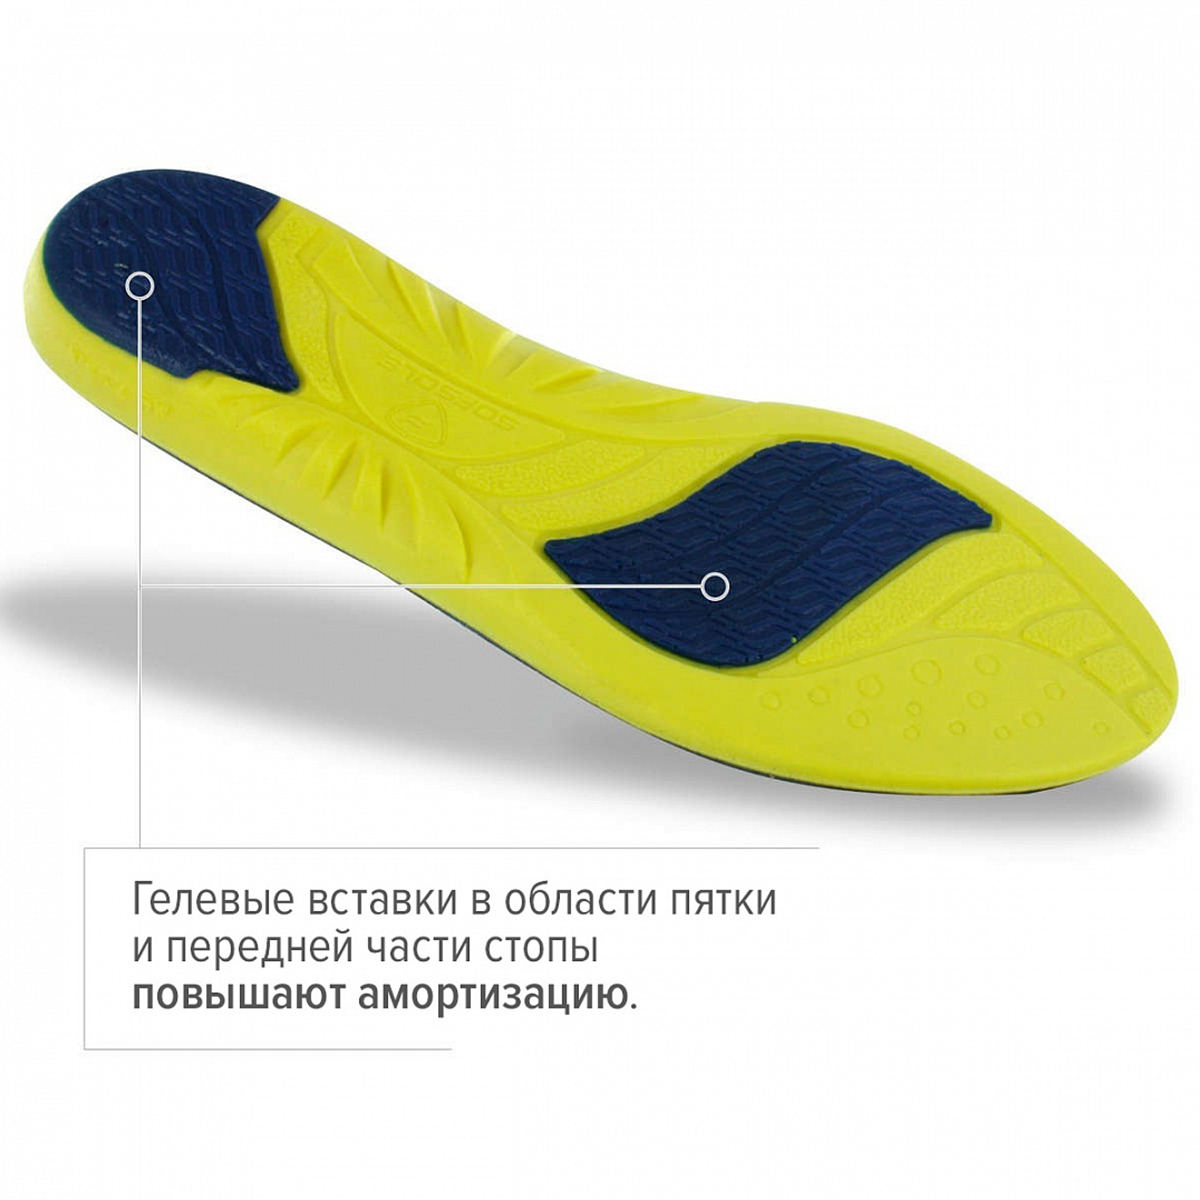 Стельки для обуви Sofsole Athlete р.36-38